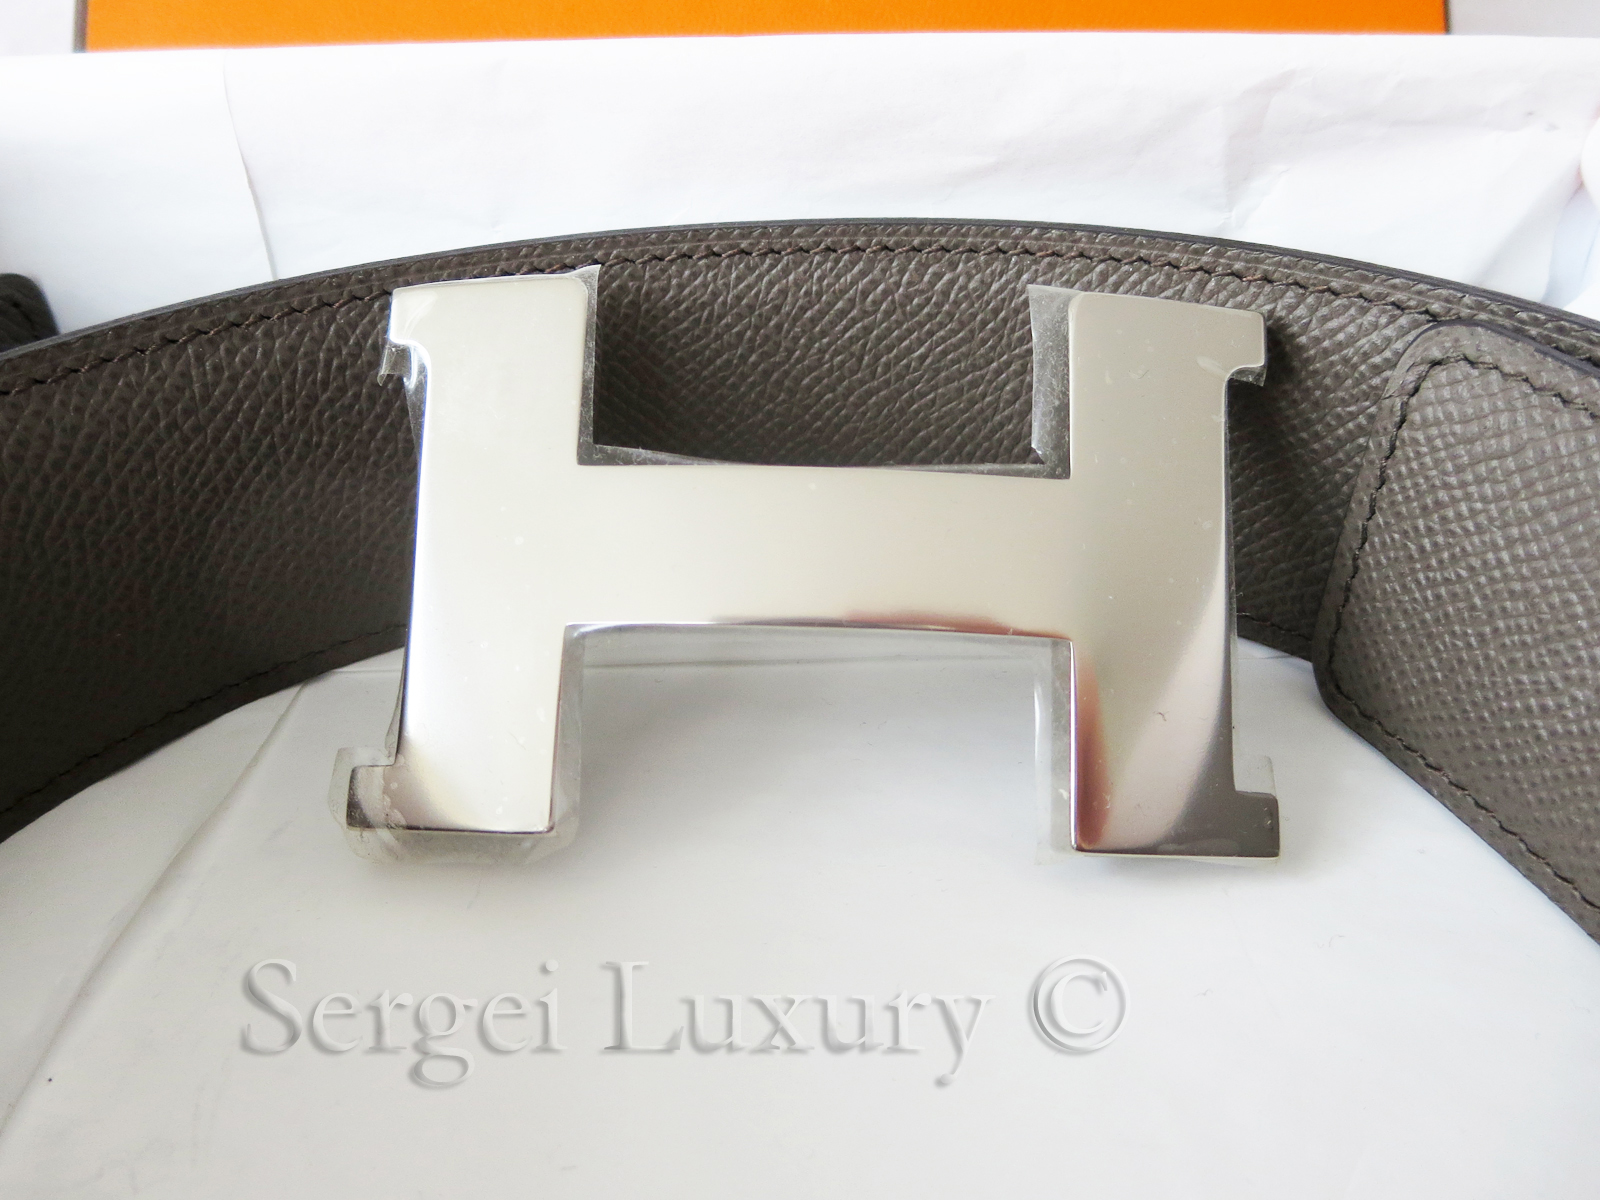 Brand new Hermes Belt Buckle model Constance in Shiny Silver